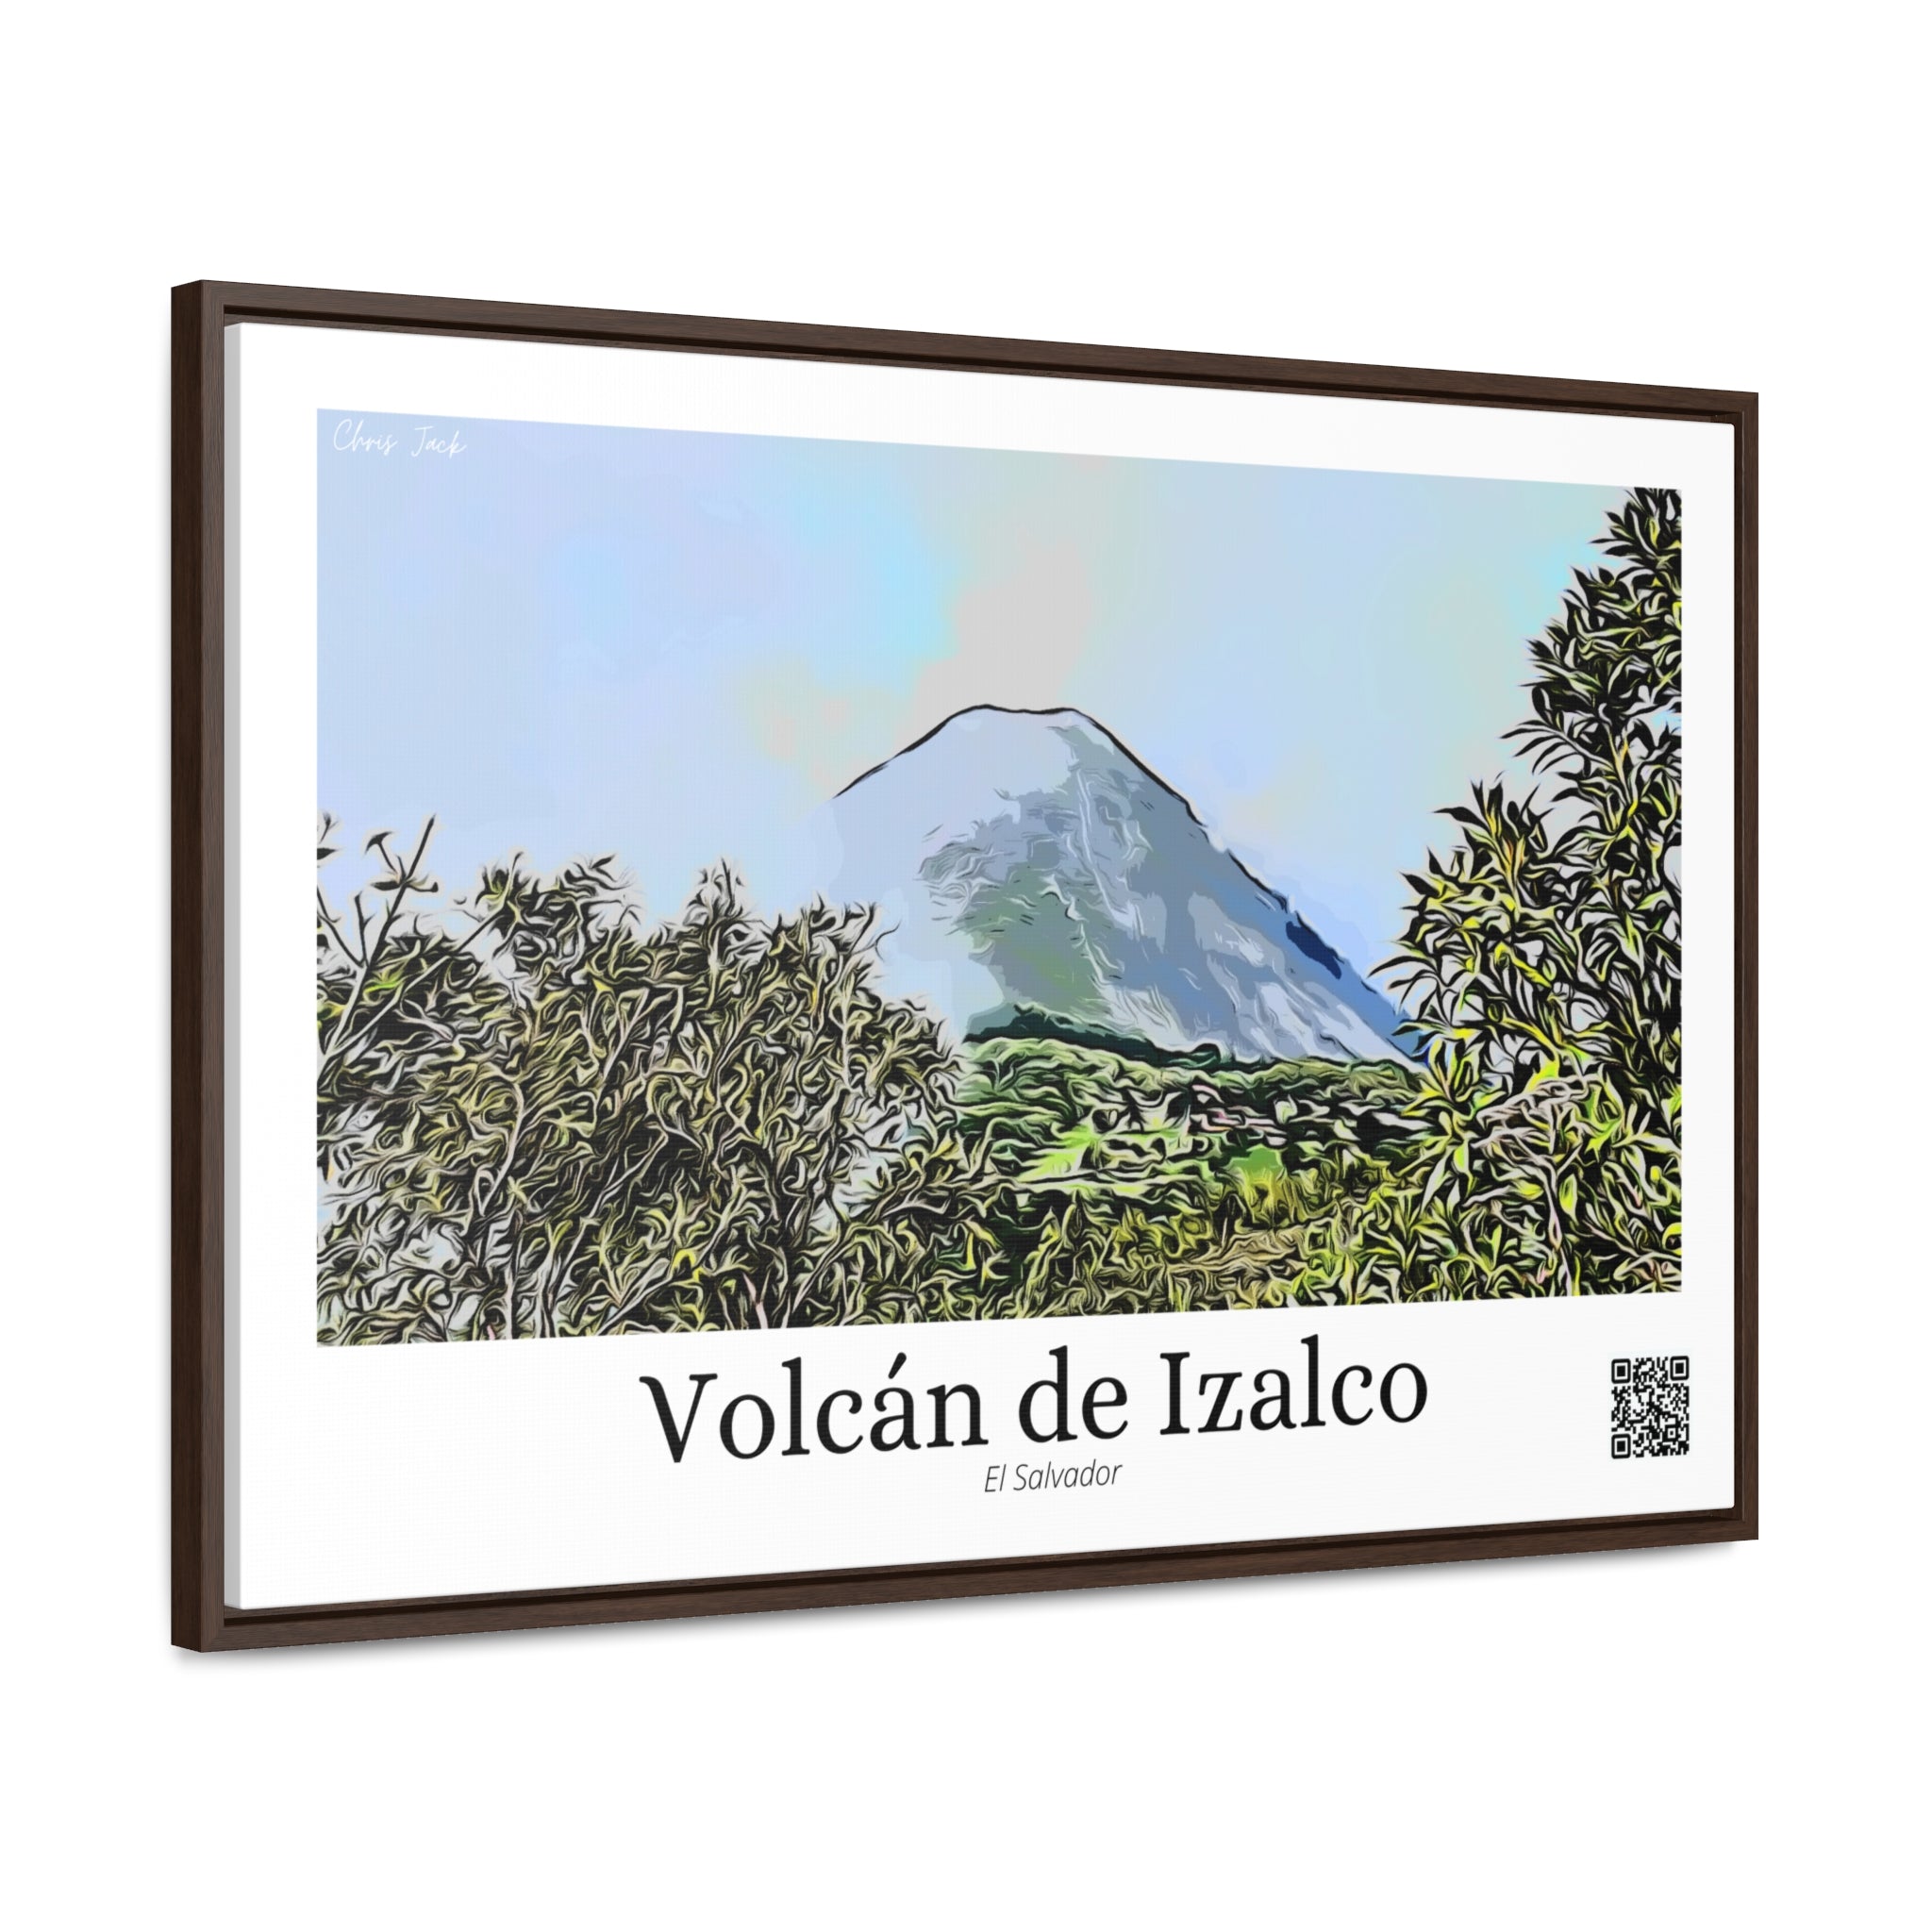 Volcanic Vistas: A Glimpse of Izalco from Santa Ana